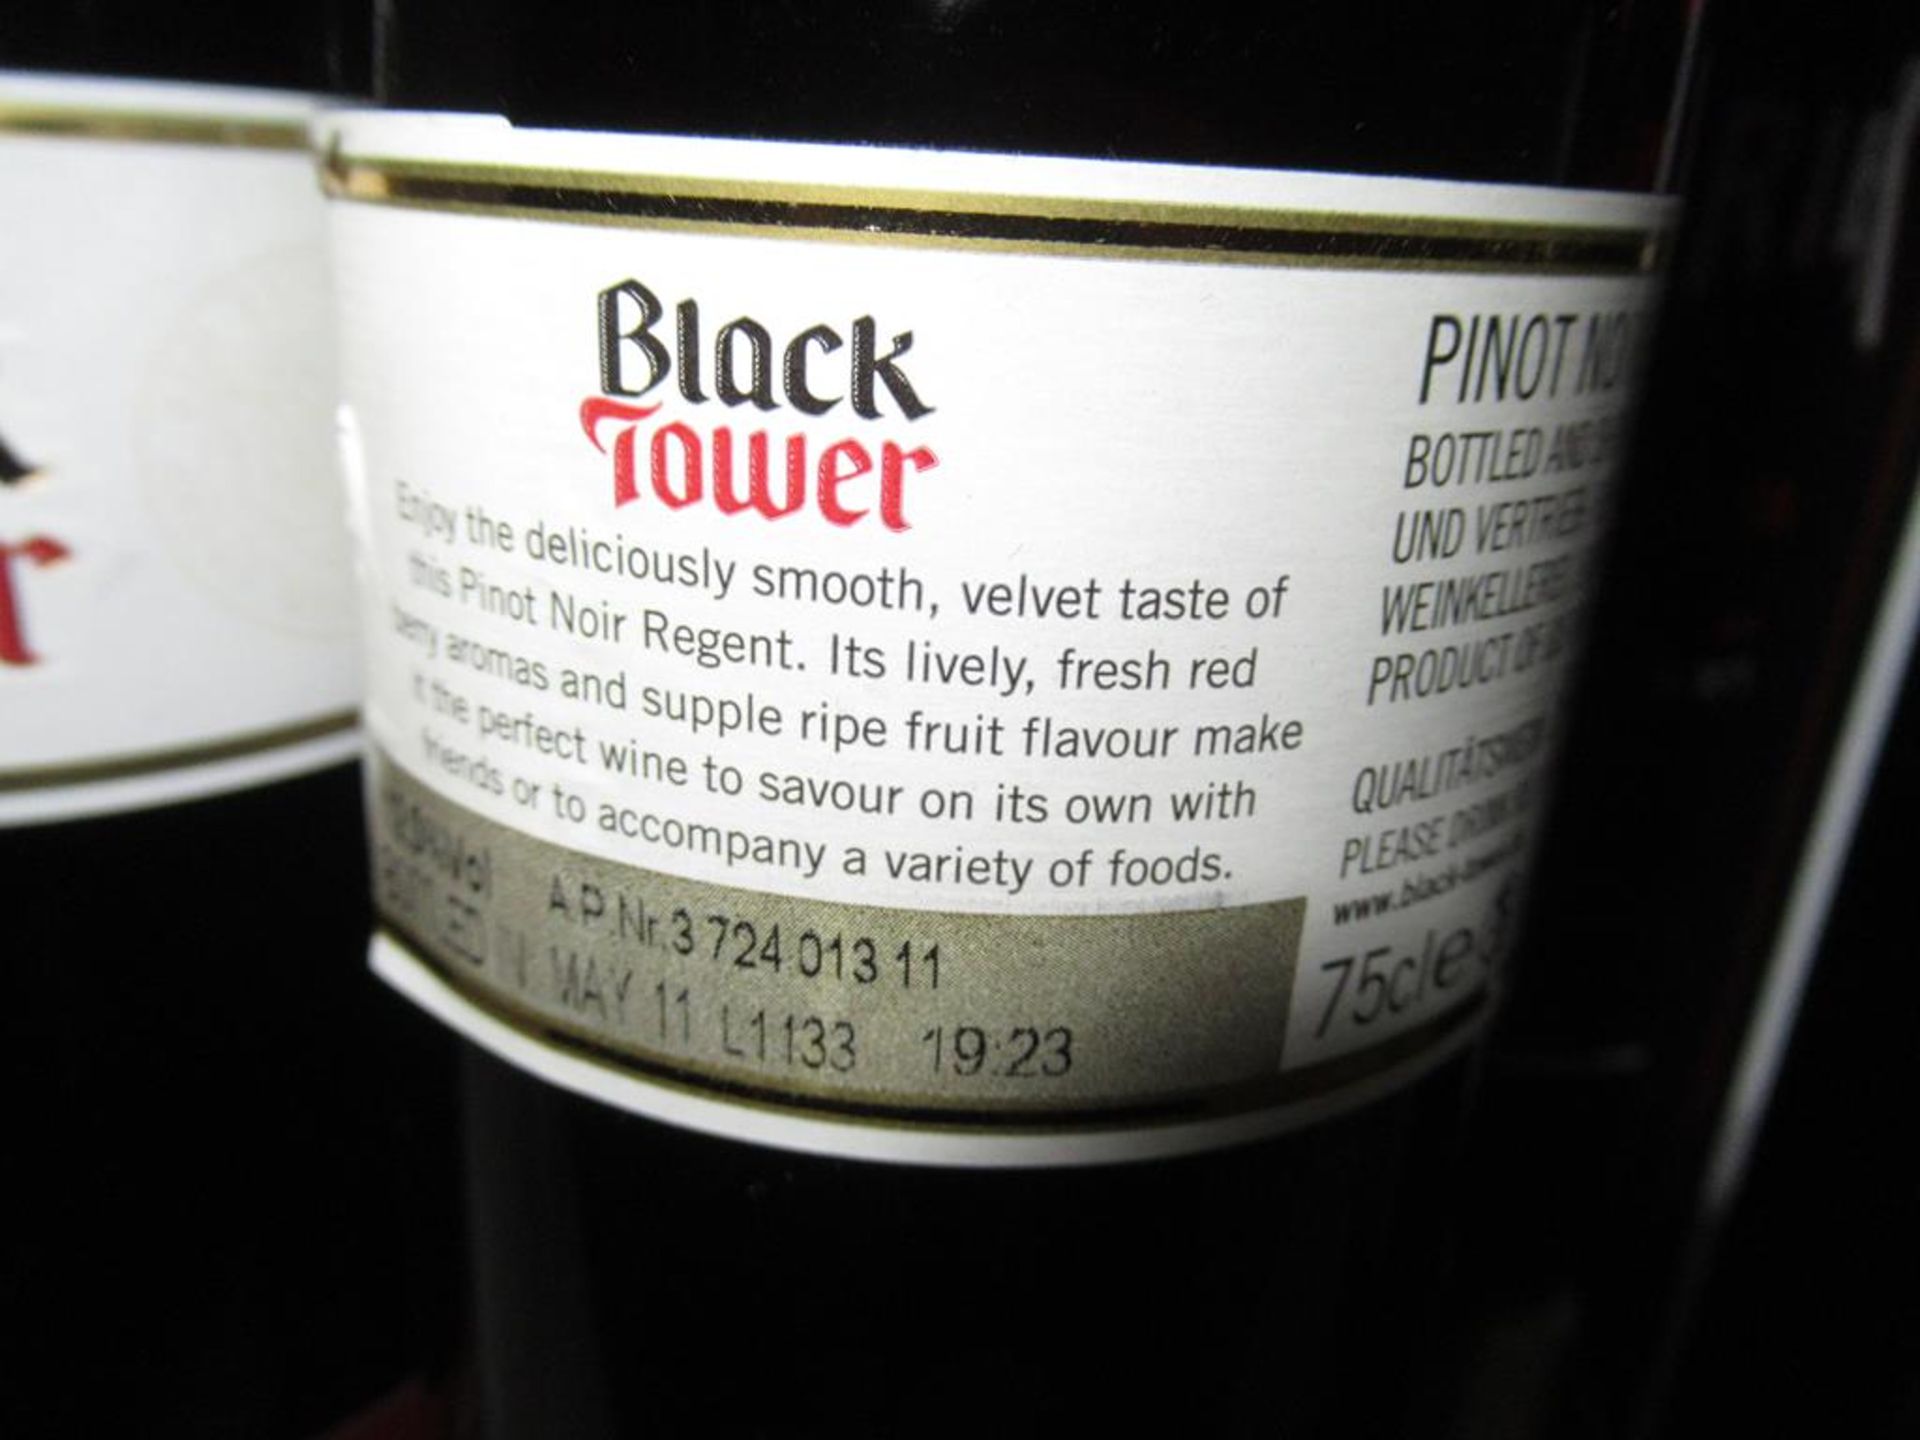 Six bottles of Black Tower Pinot Noir Regent red wine, four bottles of Black Tower smooth red wine, - Image 7 of 11